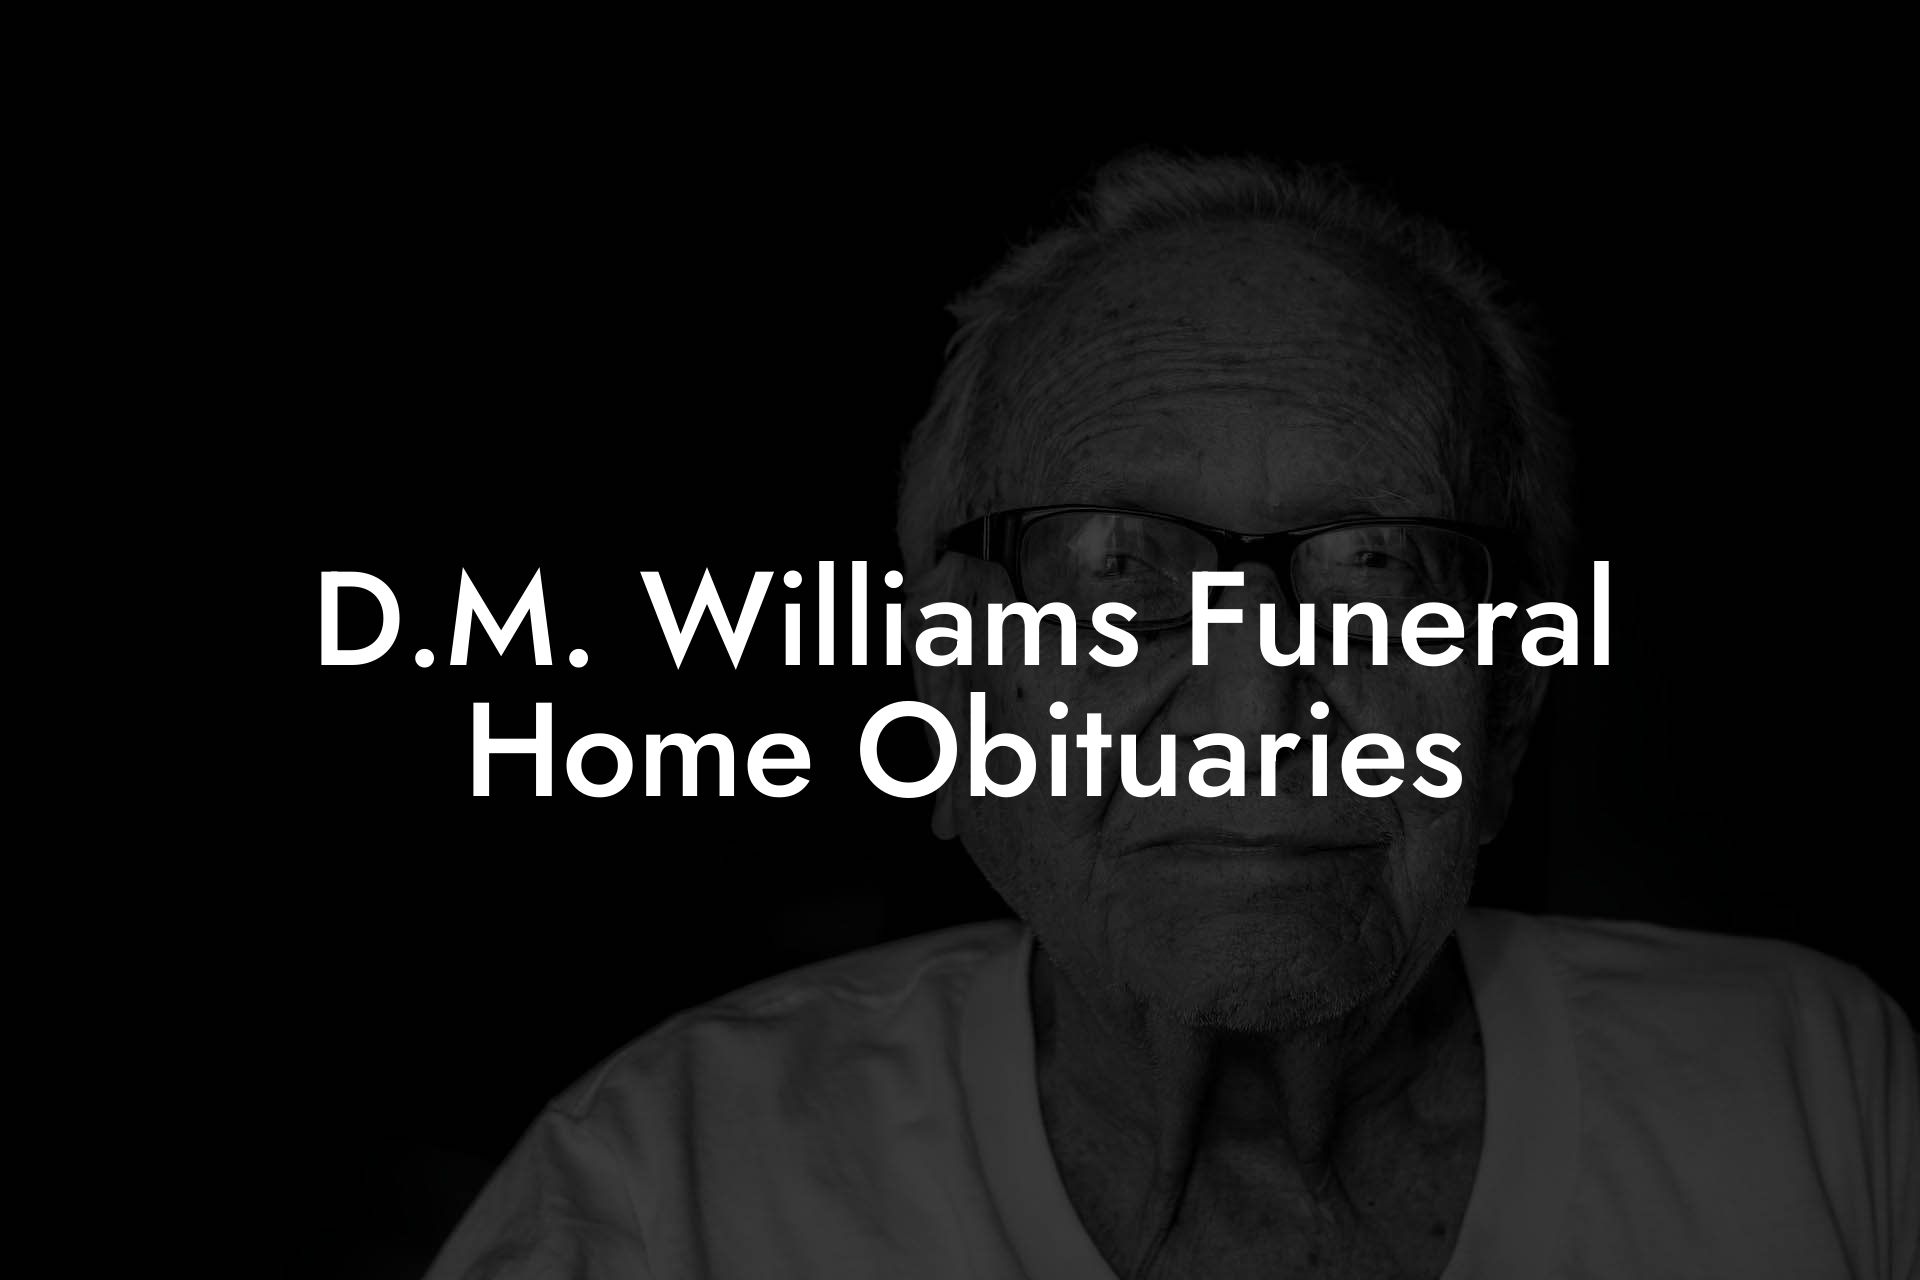 D.M. Williams Funeral Home Obituaries